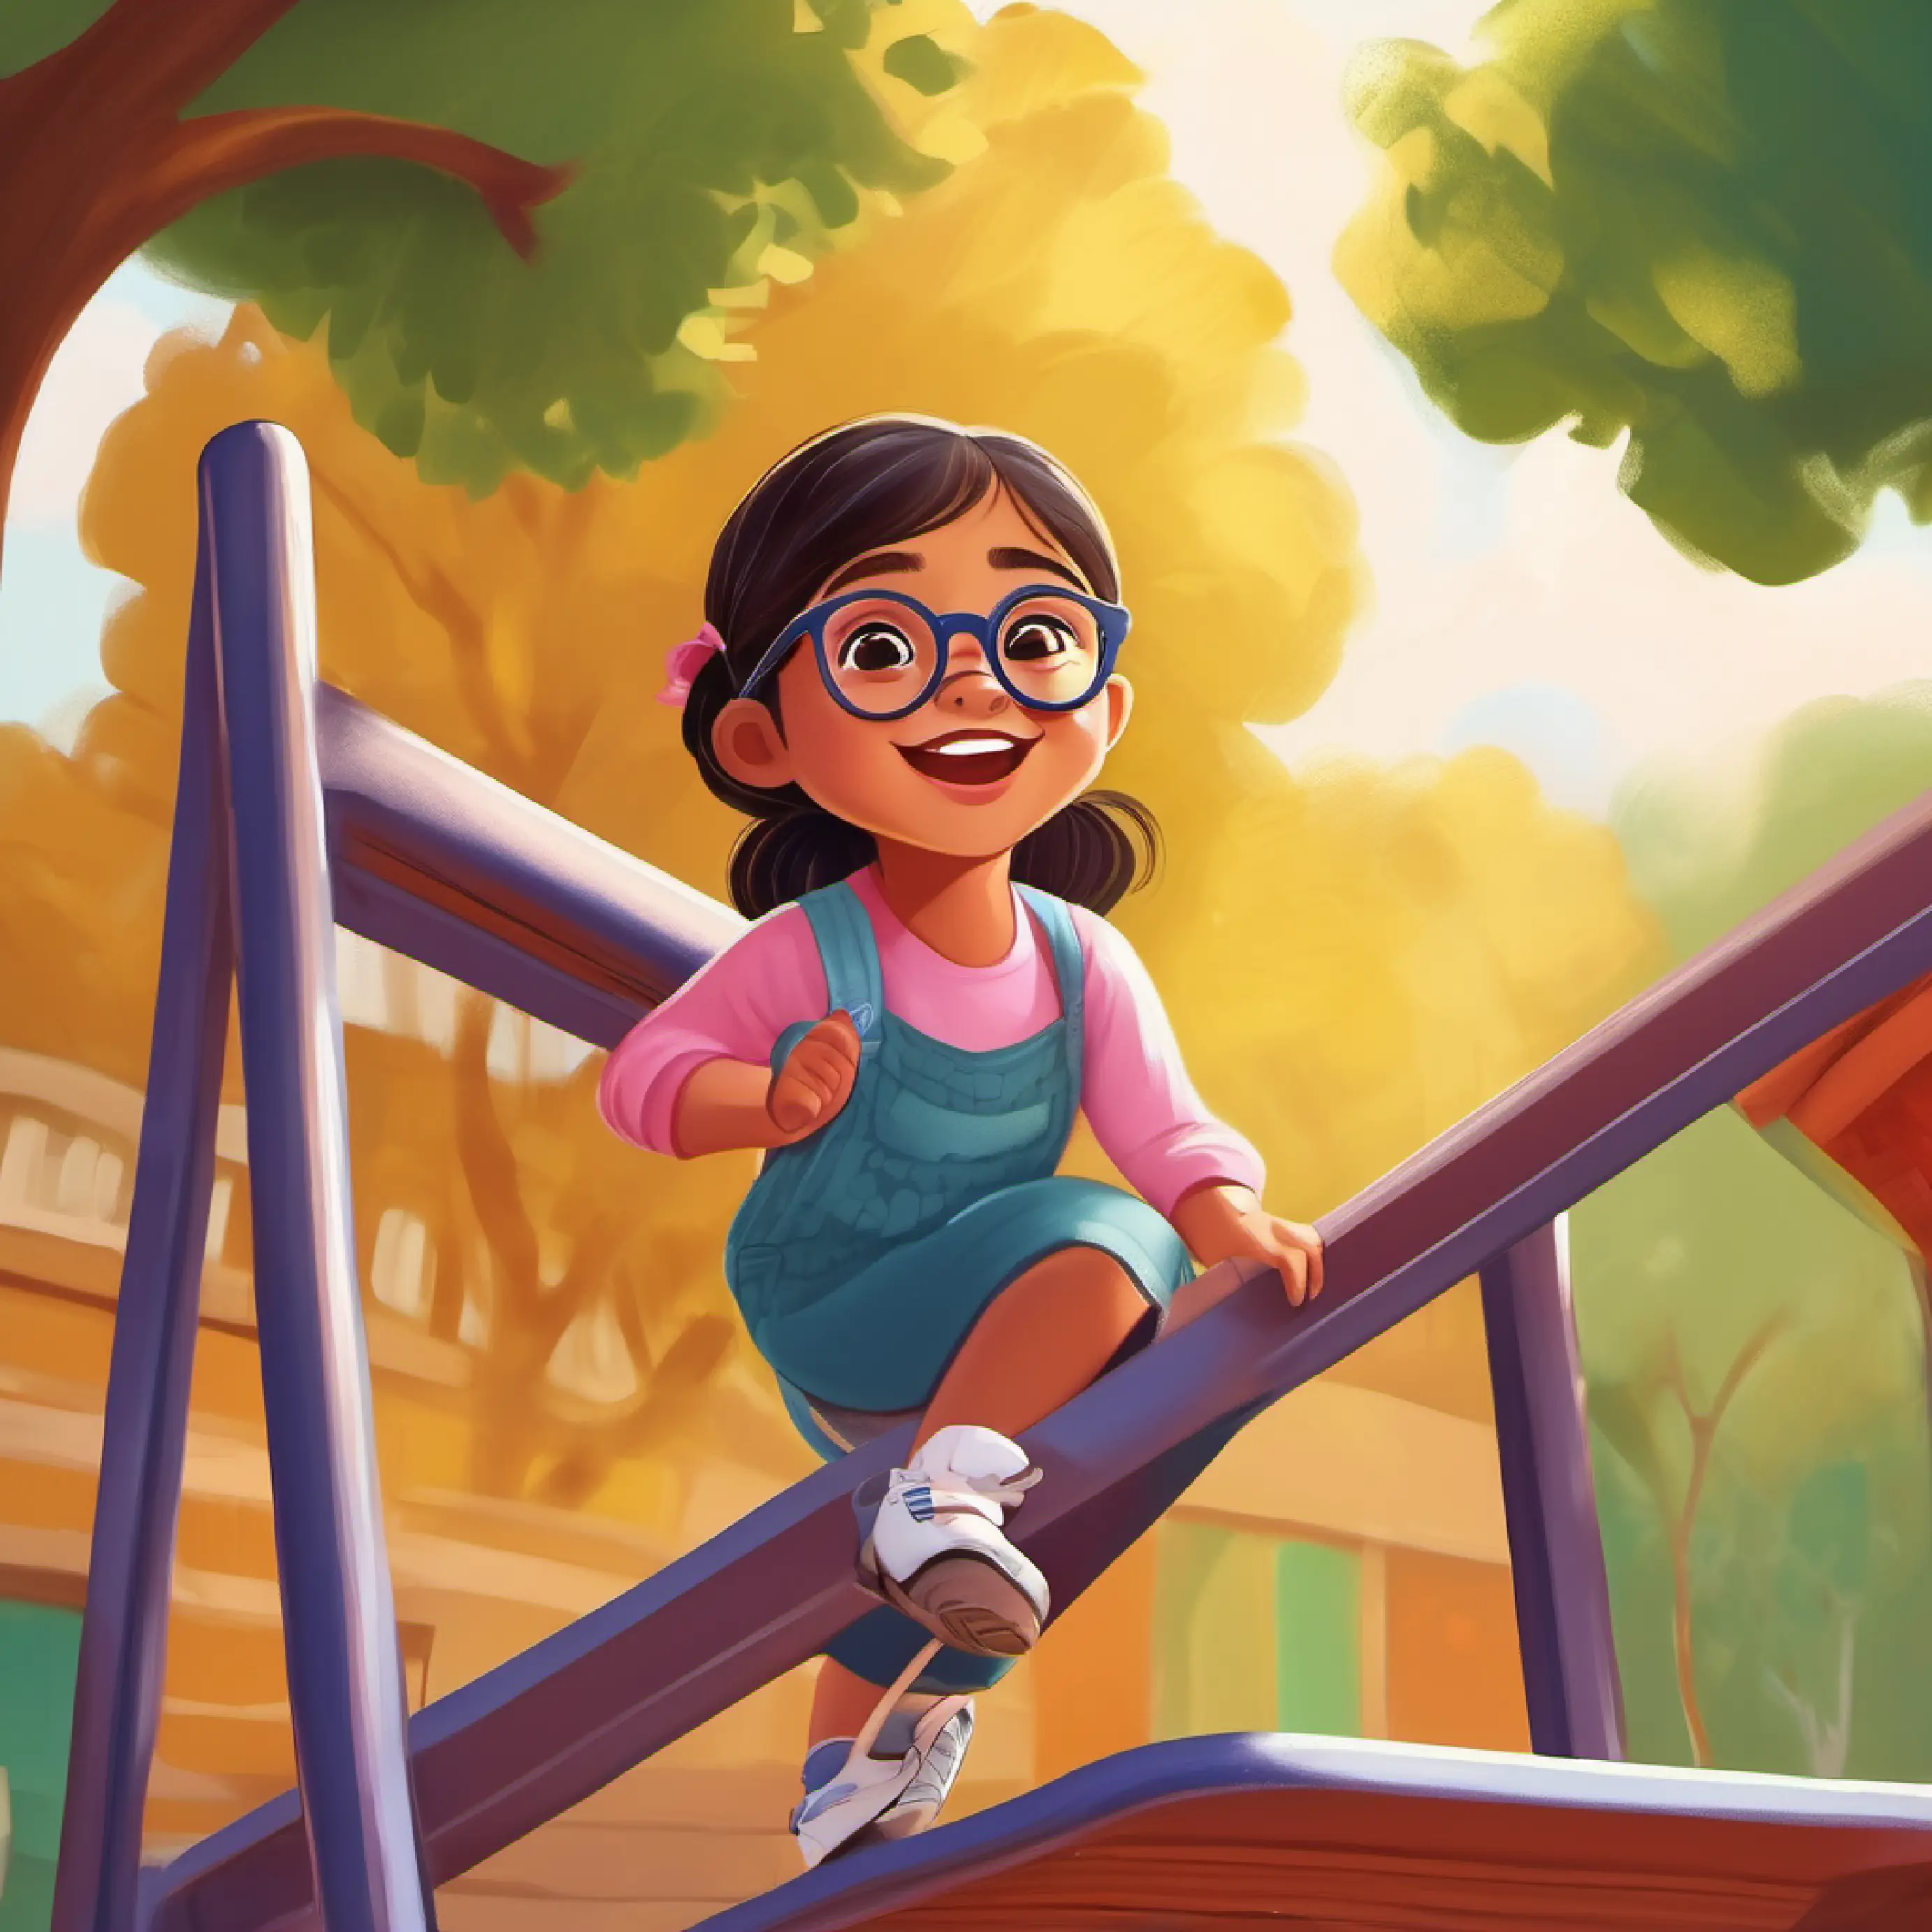 Karen climbs the ladder at the park's playground.